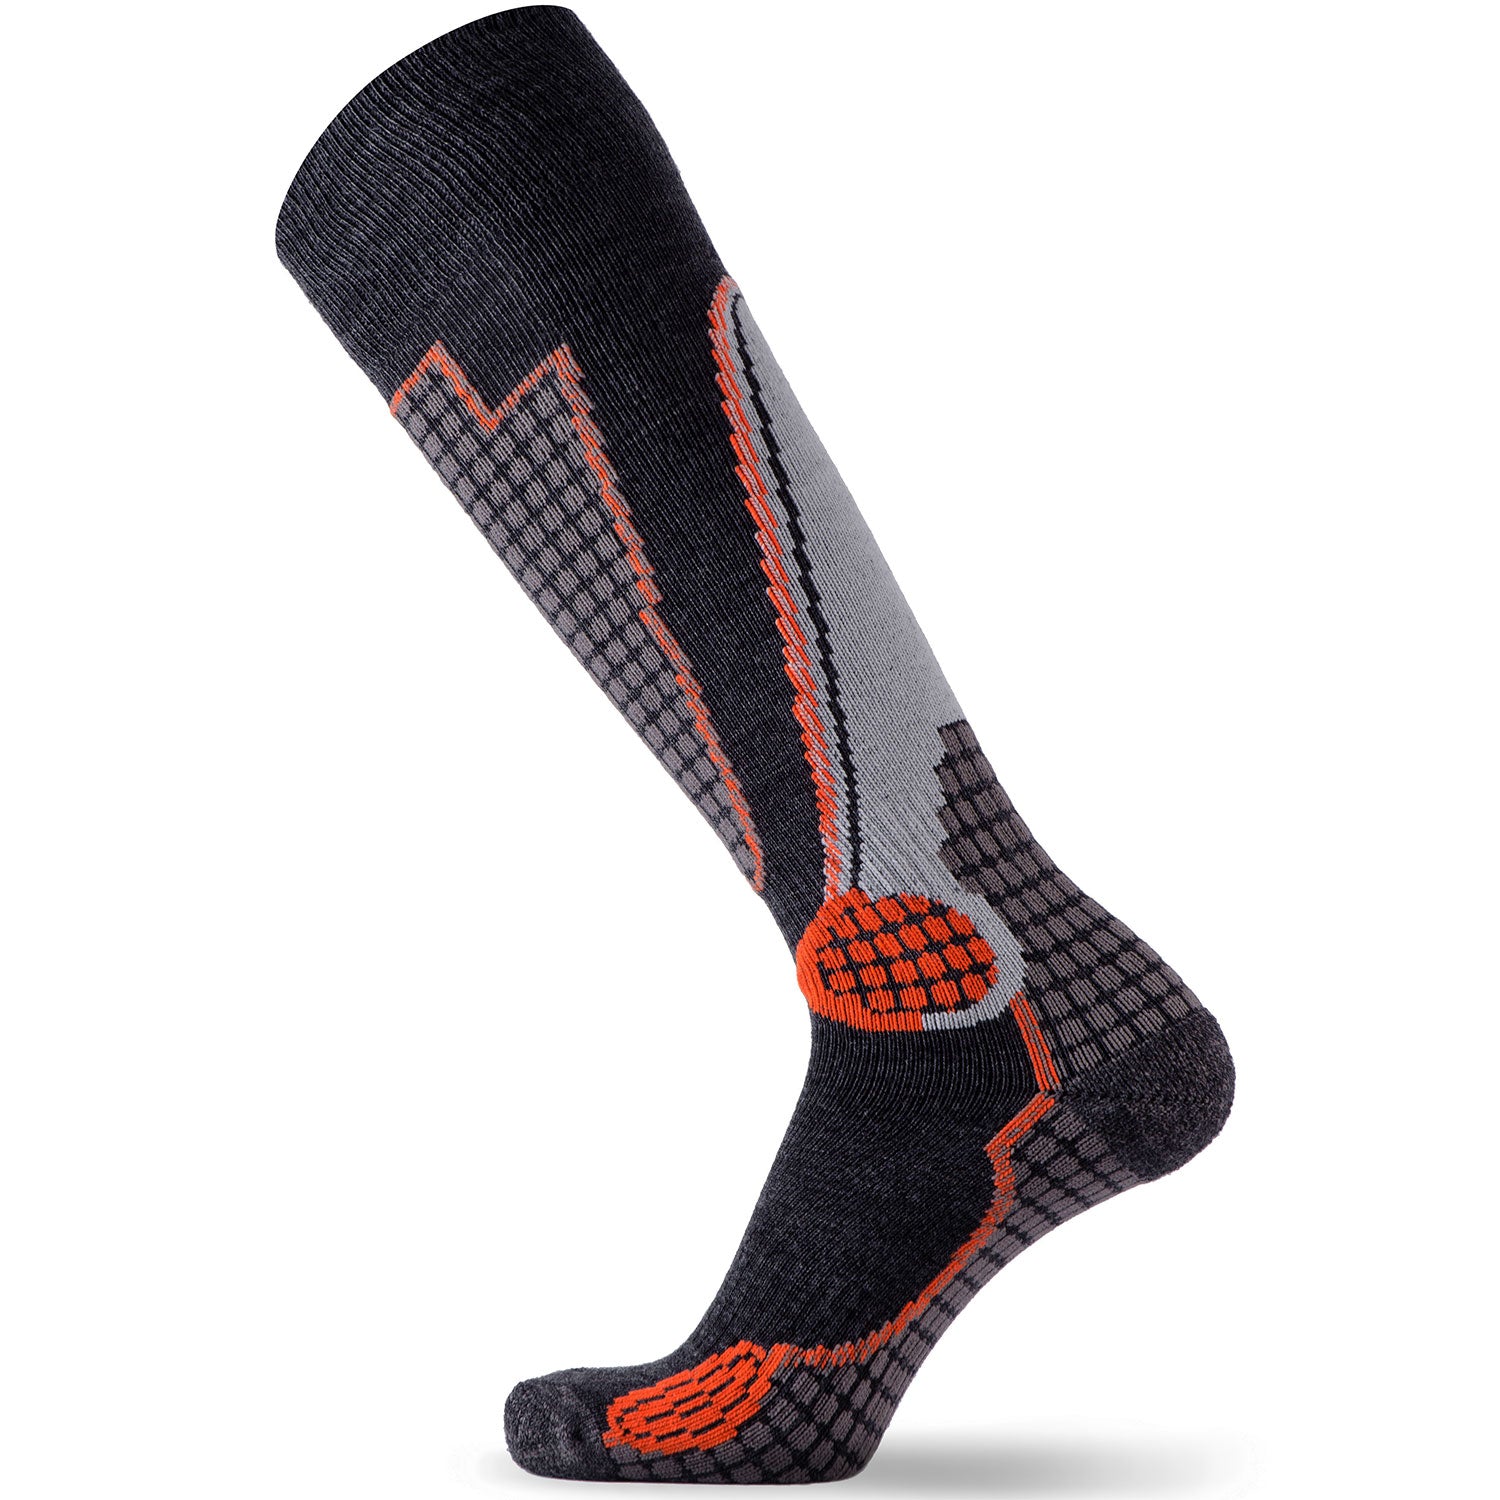 2022 Foot Sweater Ski Sock - Now On Sale